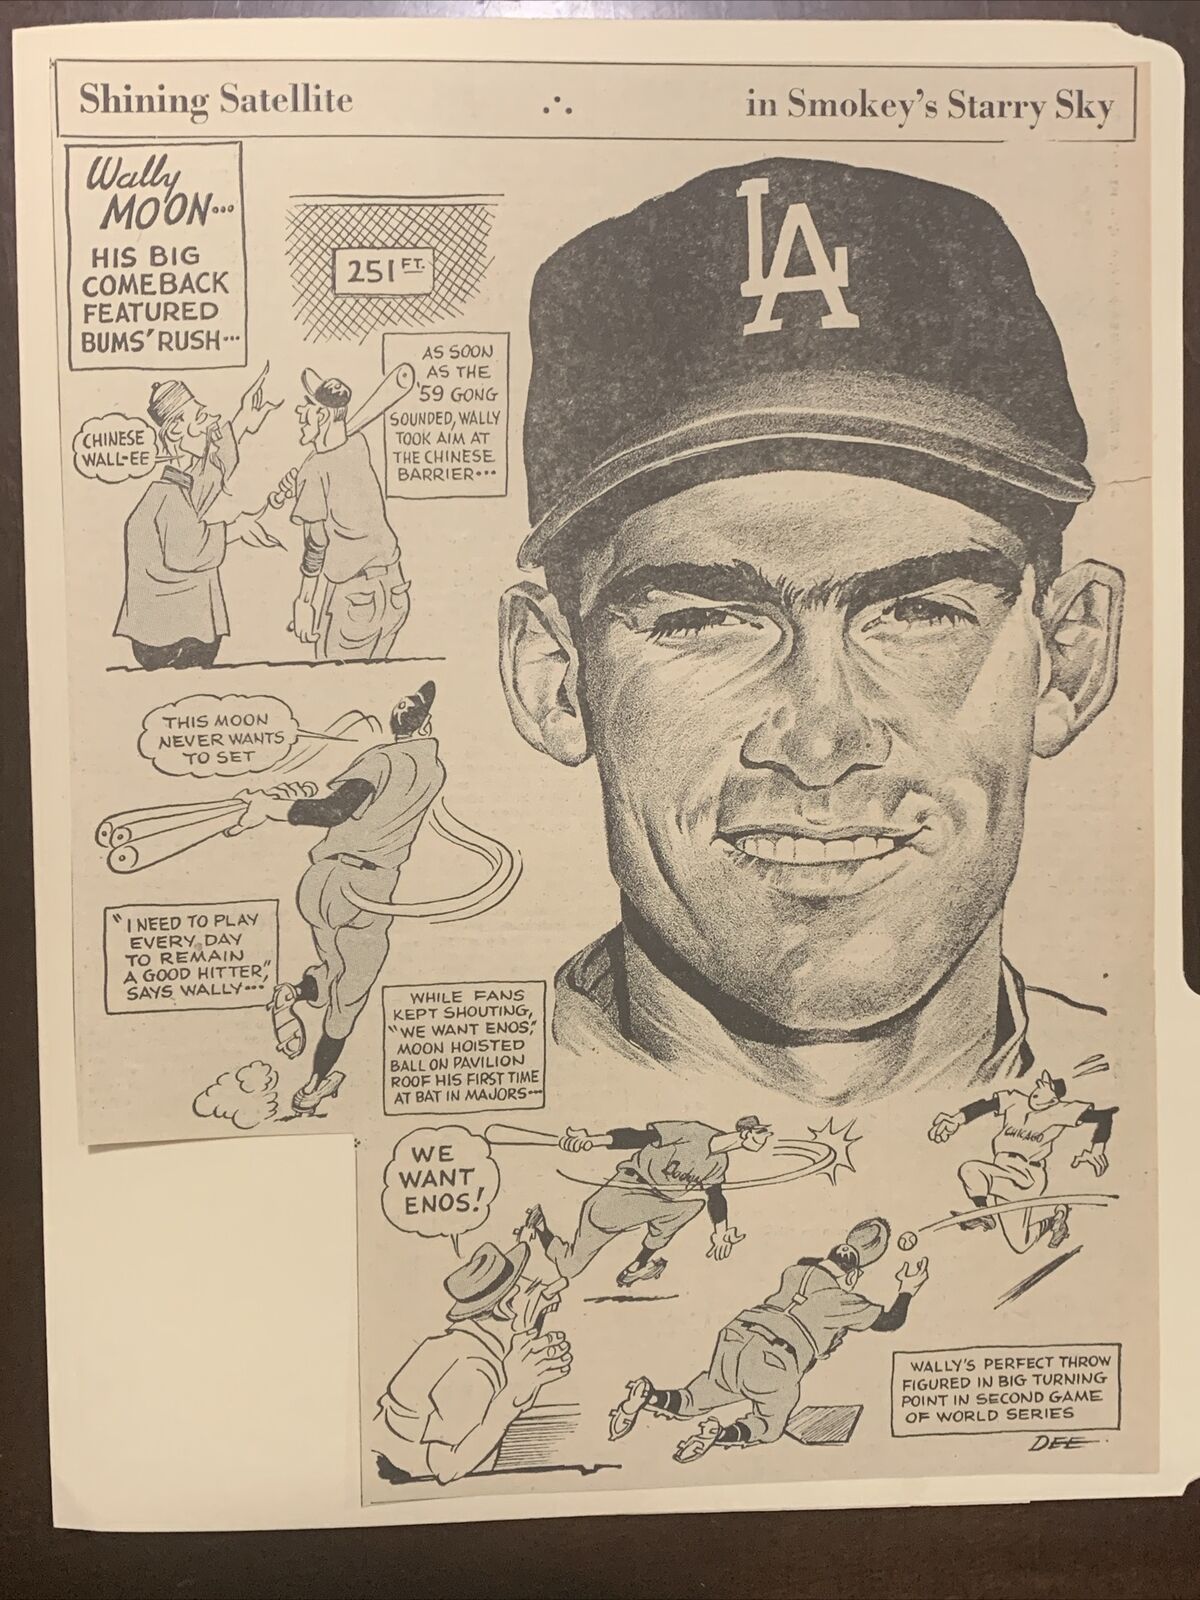 Wally Moon Los Angeles Dodgers 1959 Sporting News Baseball 11X8 Cartoon